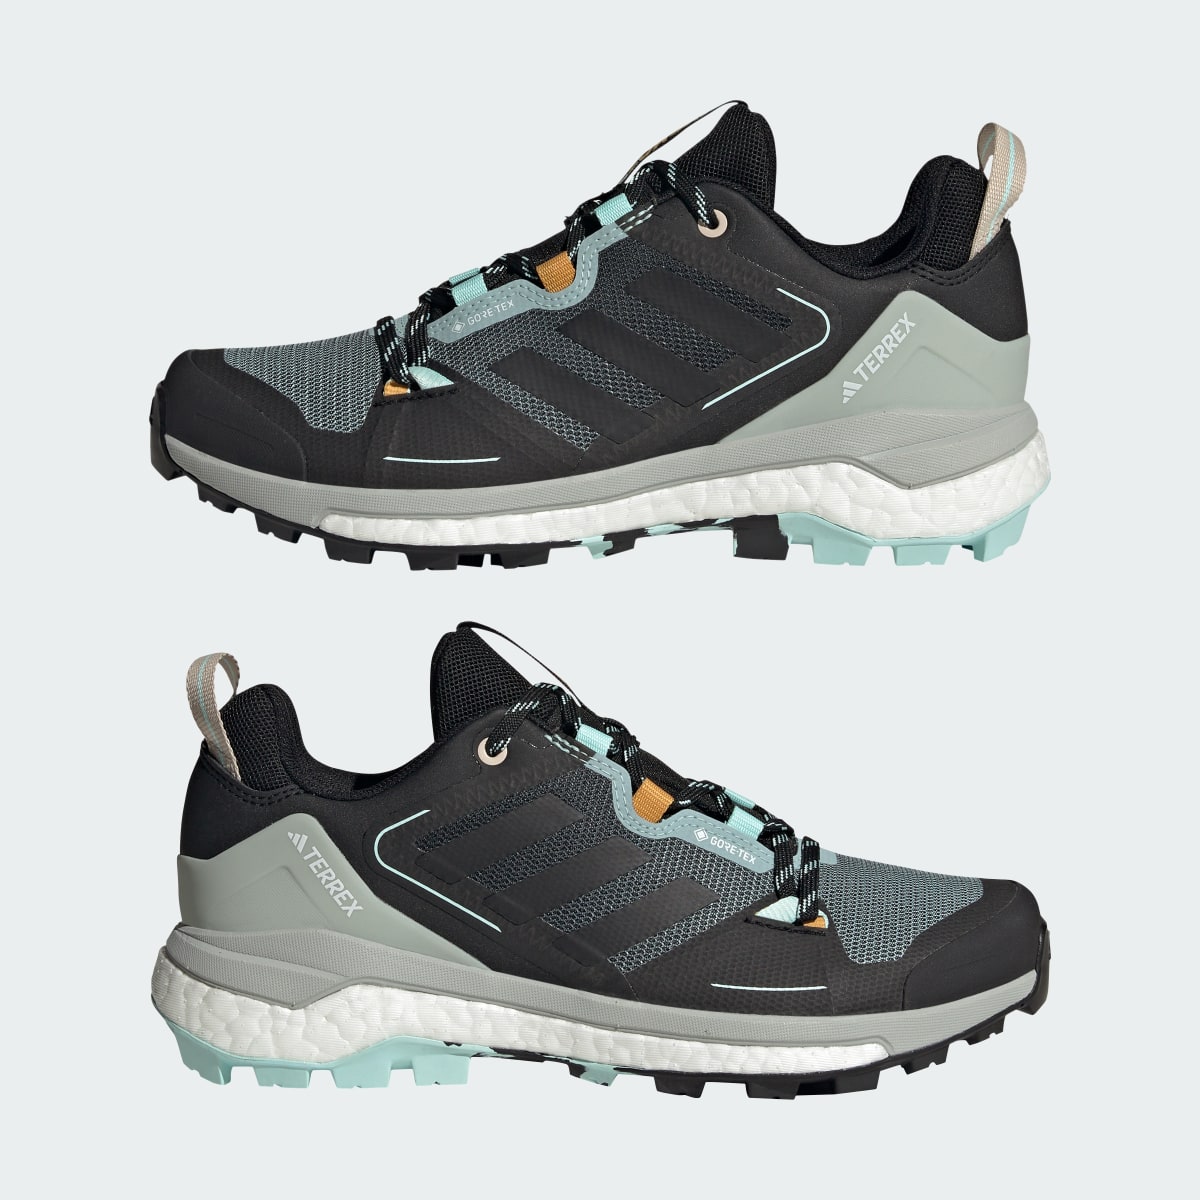 Adidas Sapatilhas de Caminhada GORE-TEX Skychaser 2.0 TERREX. 11